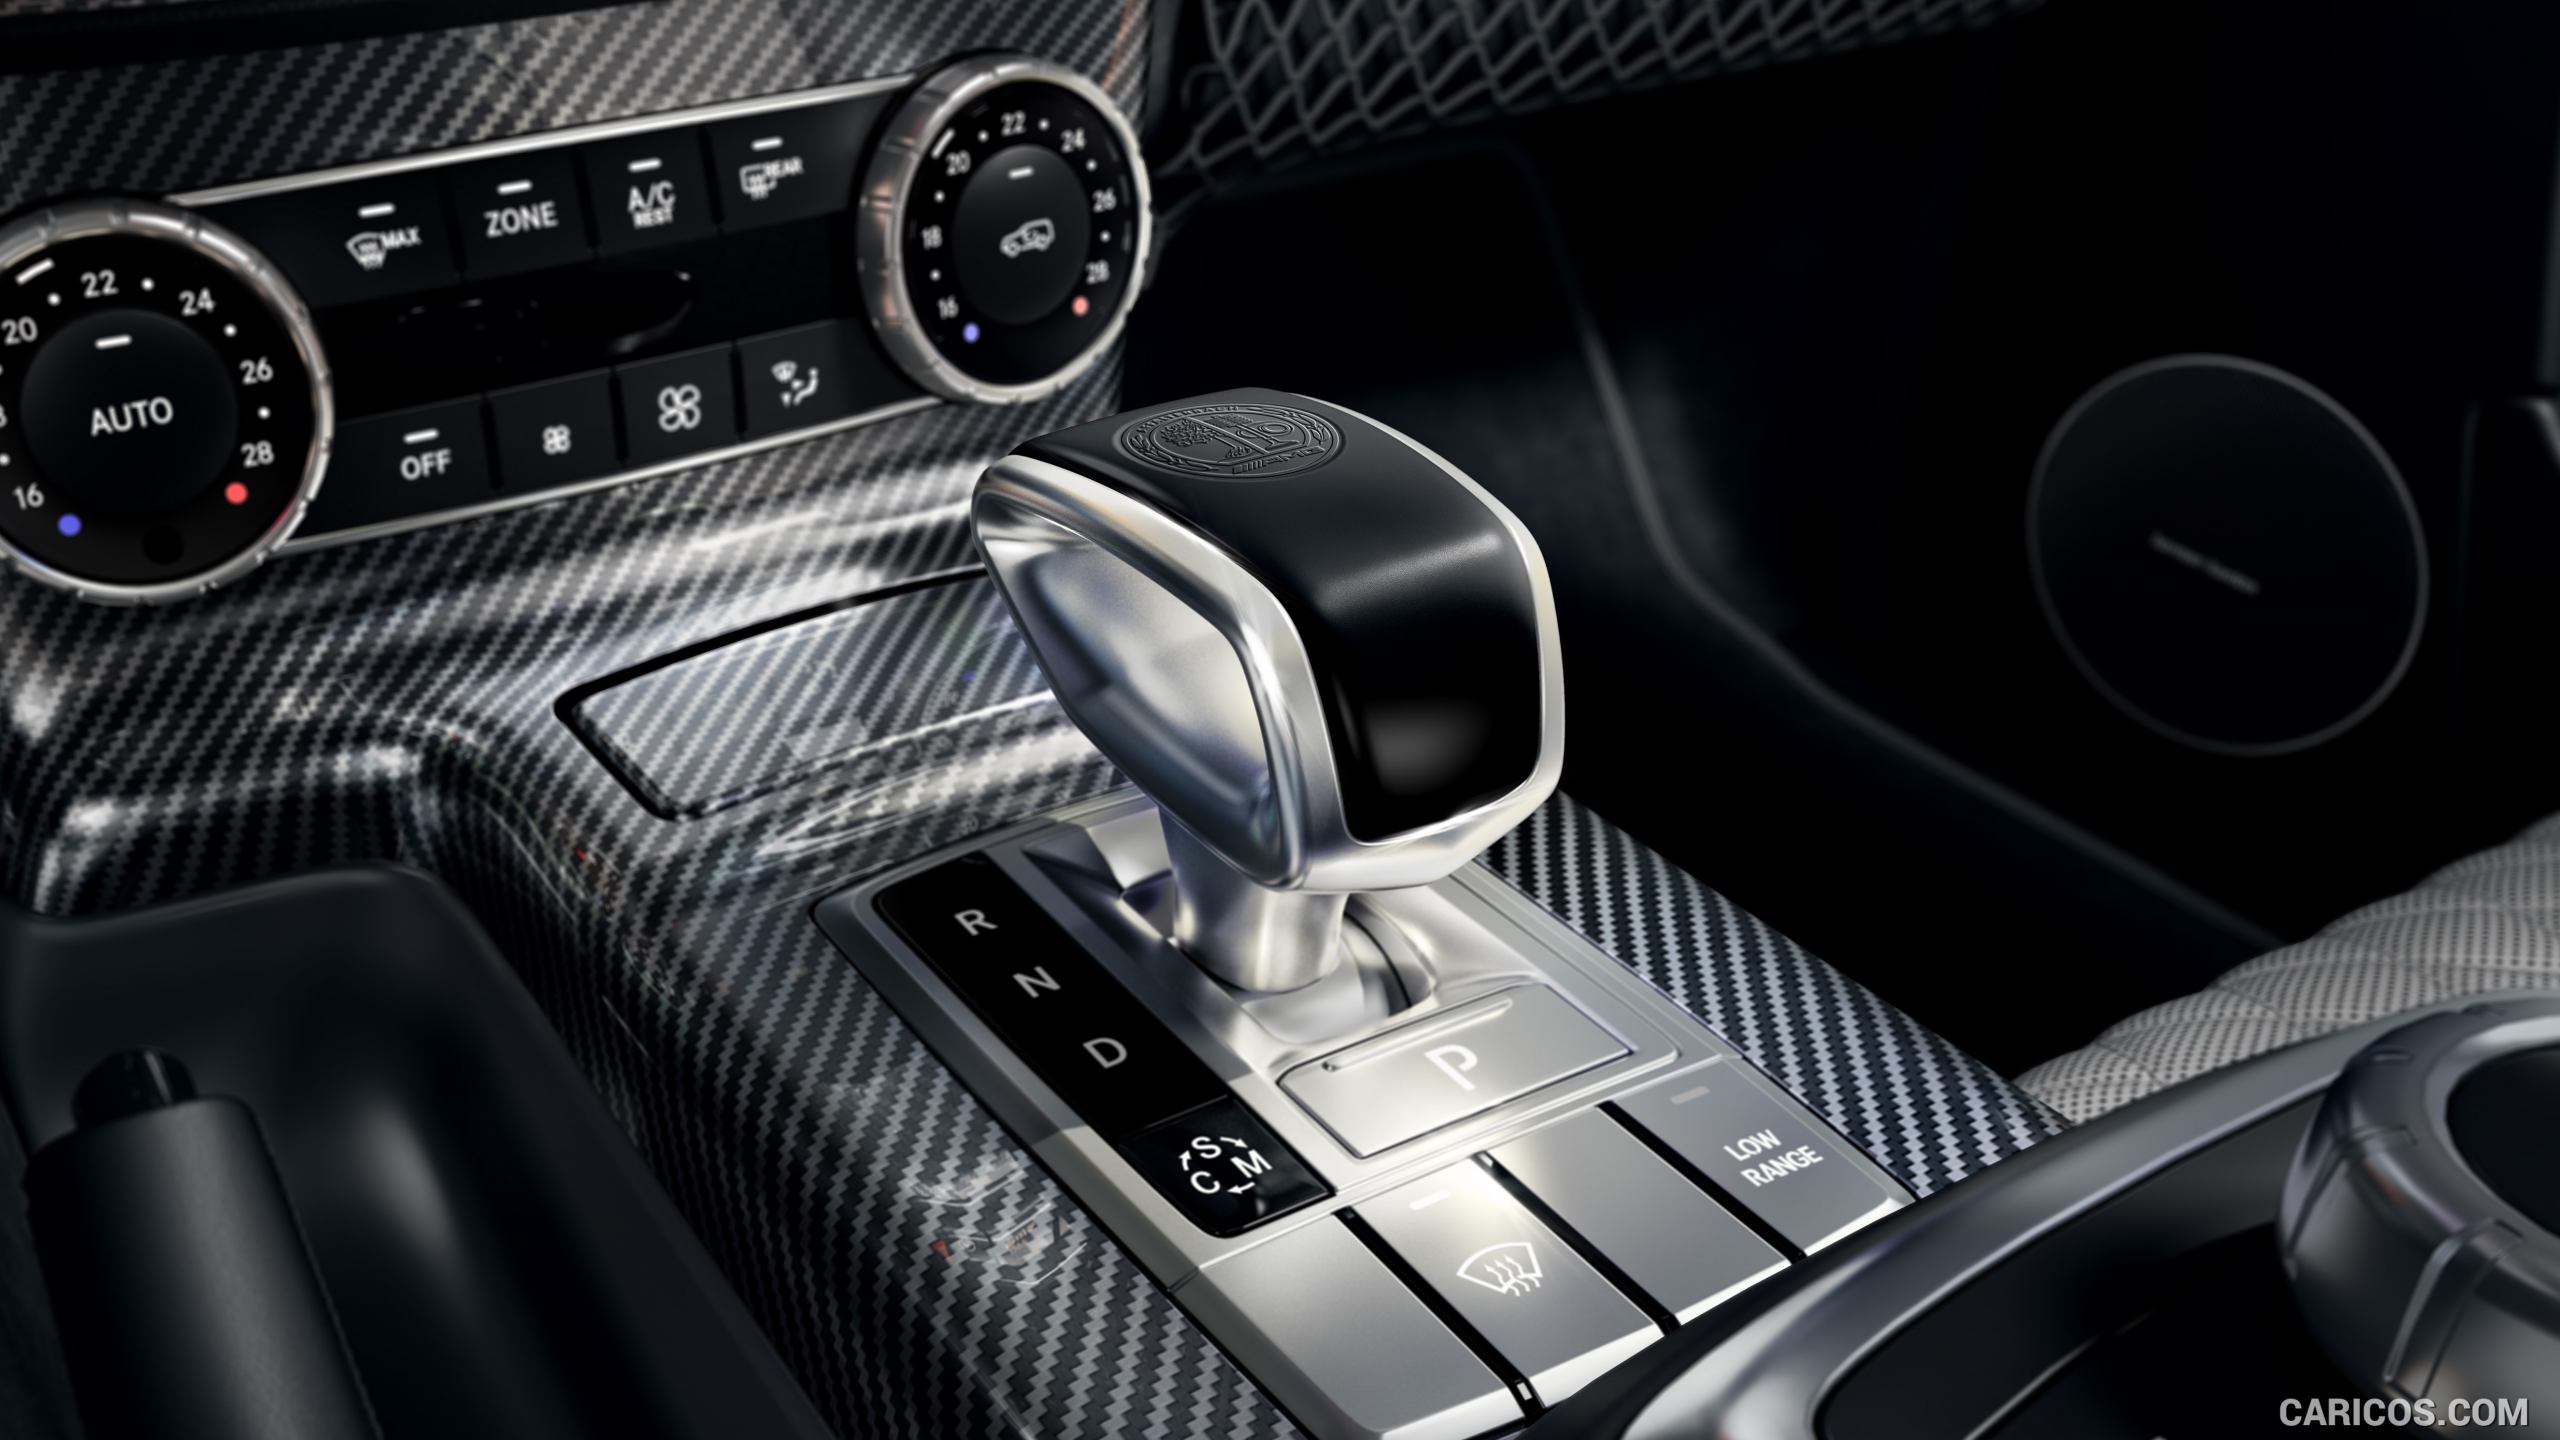 2016 Mercedes-AMG G63 (AMG Carbon Trim Parts) - Interior Detail, #13 of 48